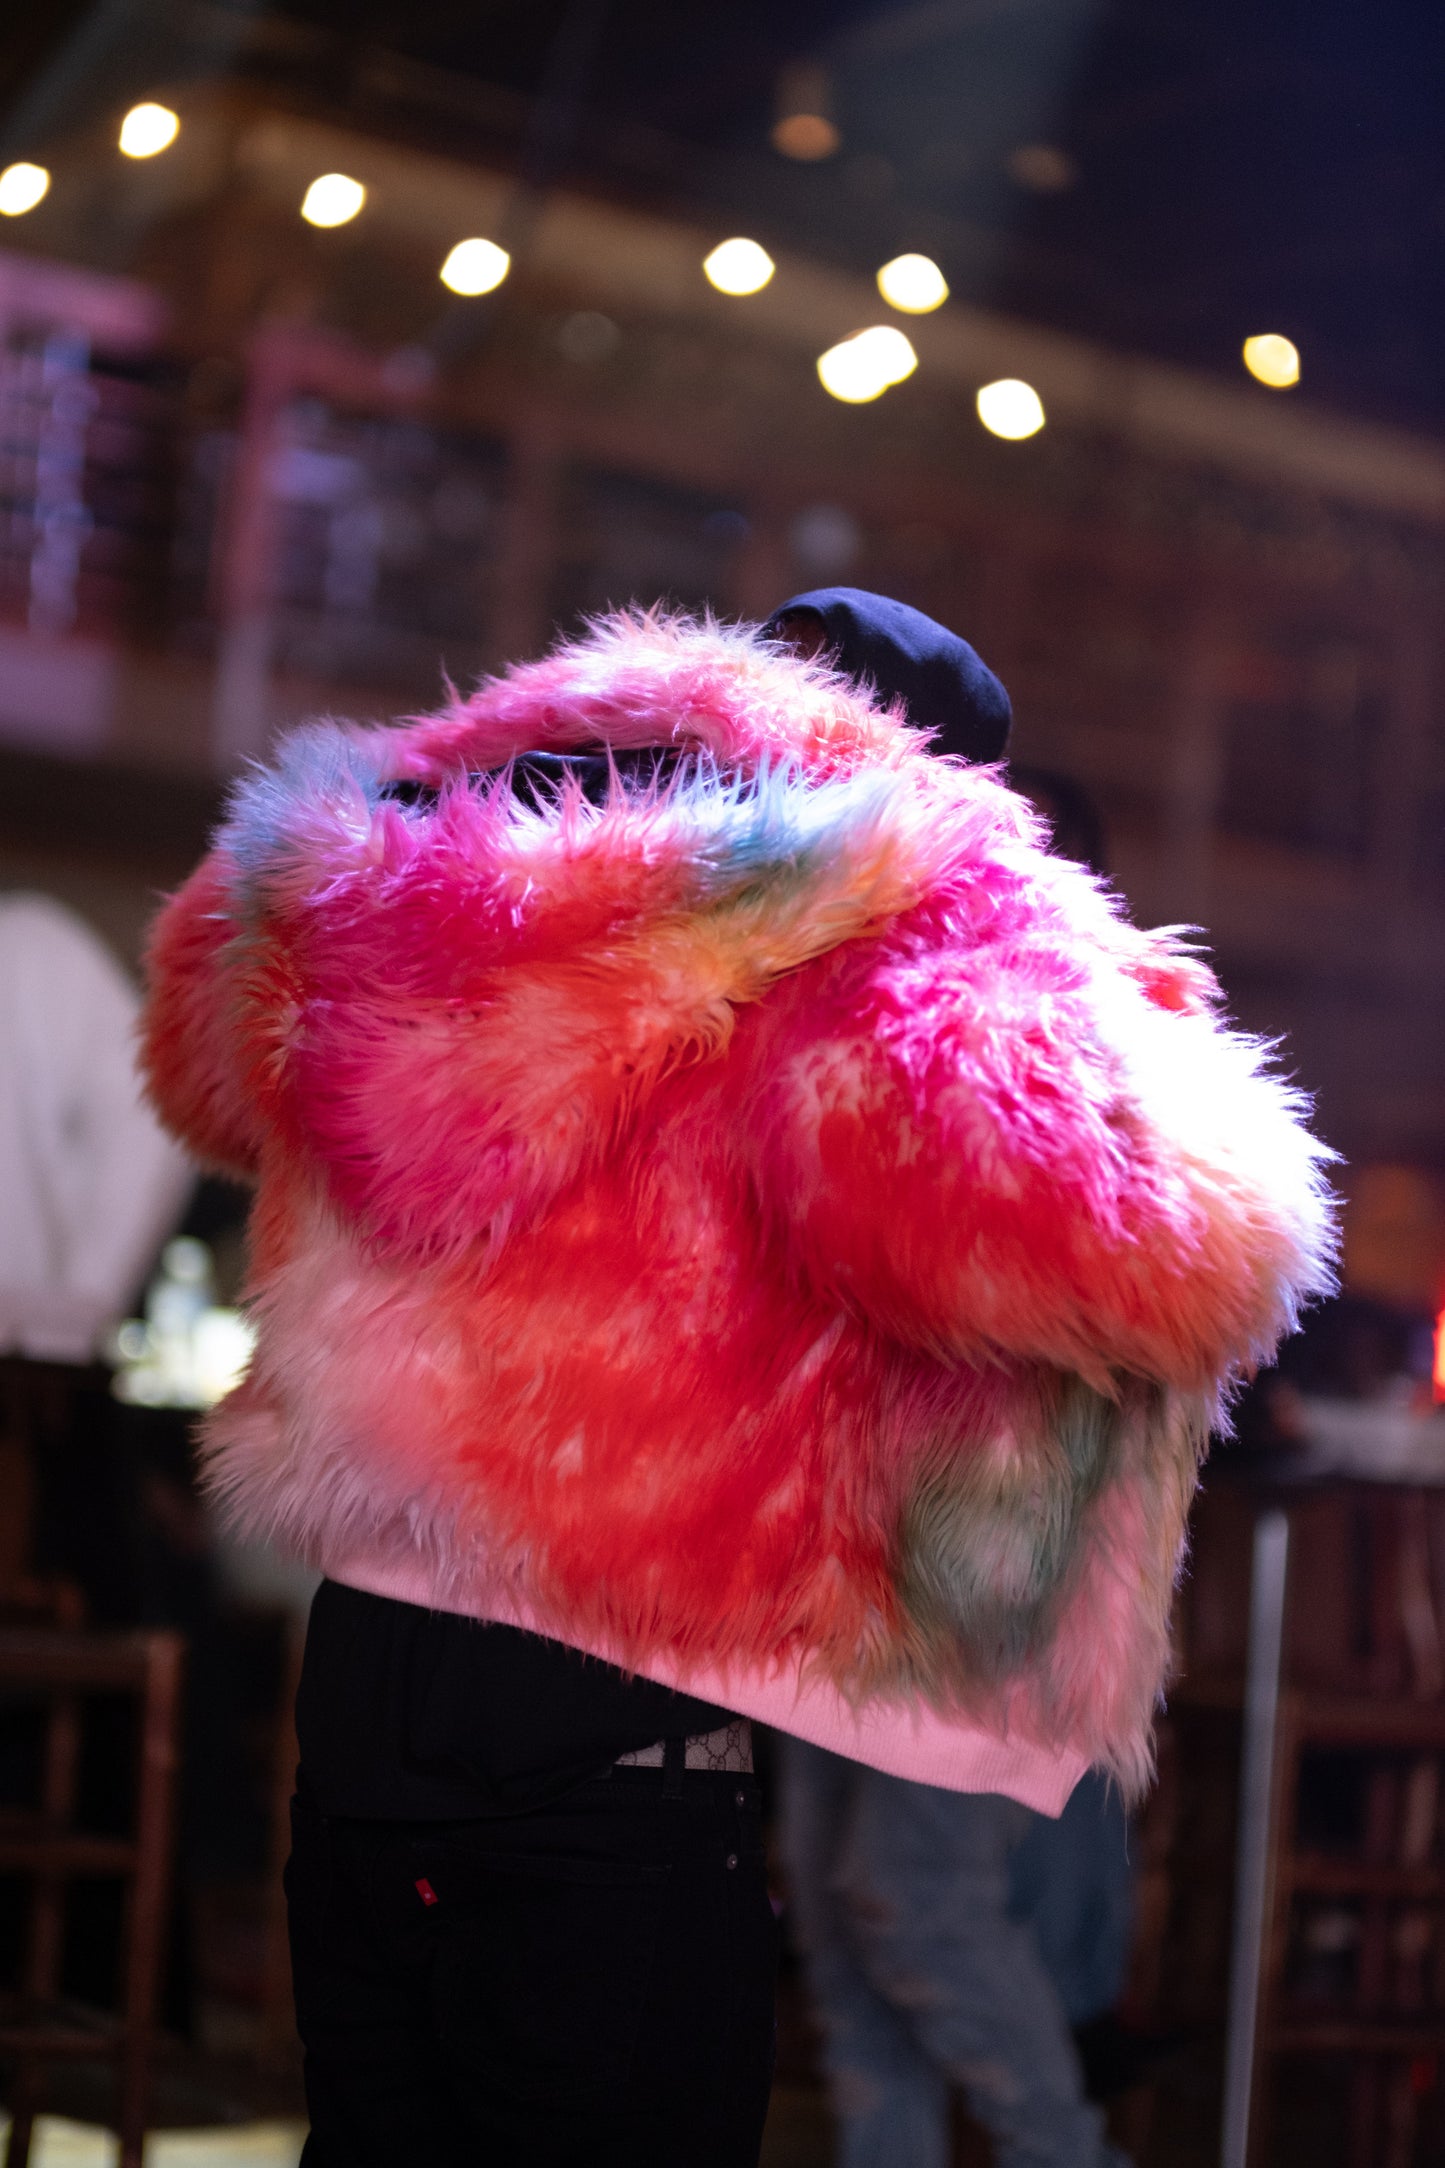 RabbitJax Hand-Dyed Rainbow Faux Fur Coat